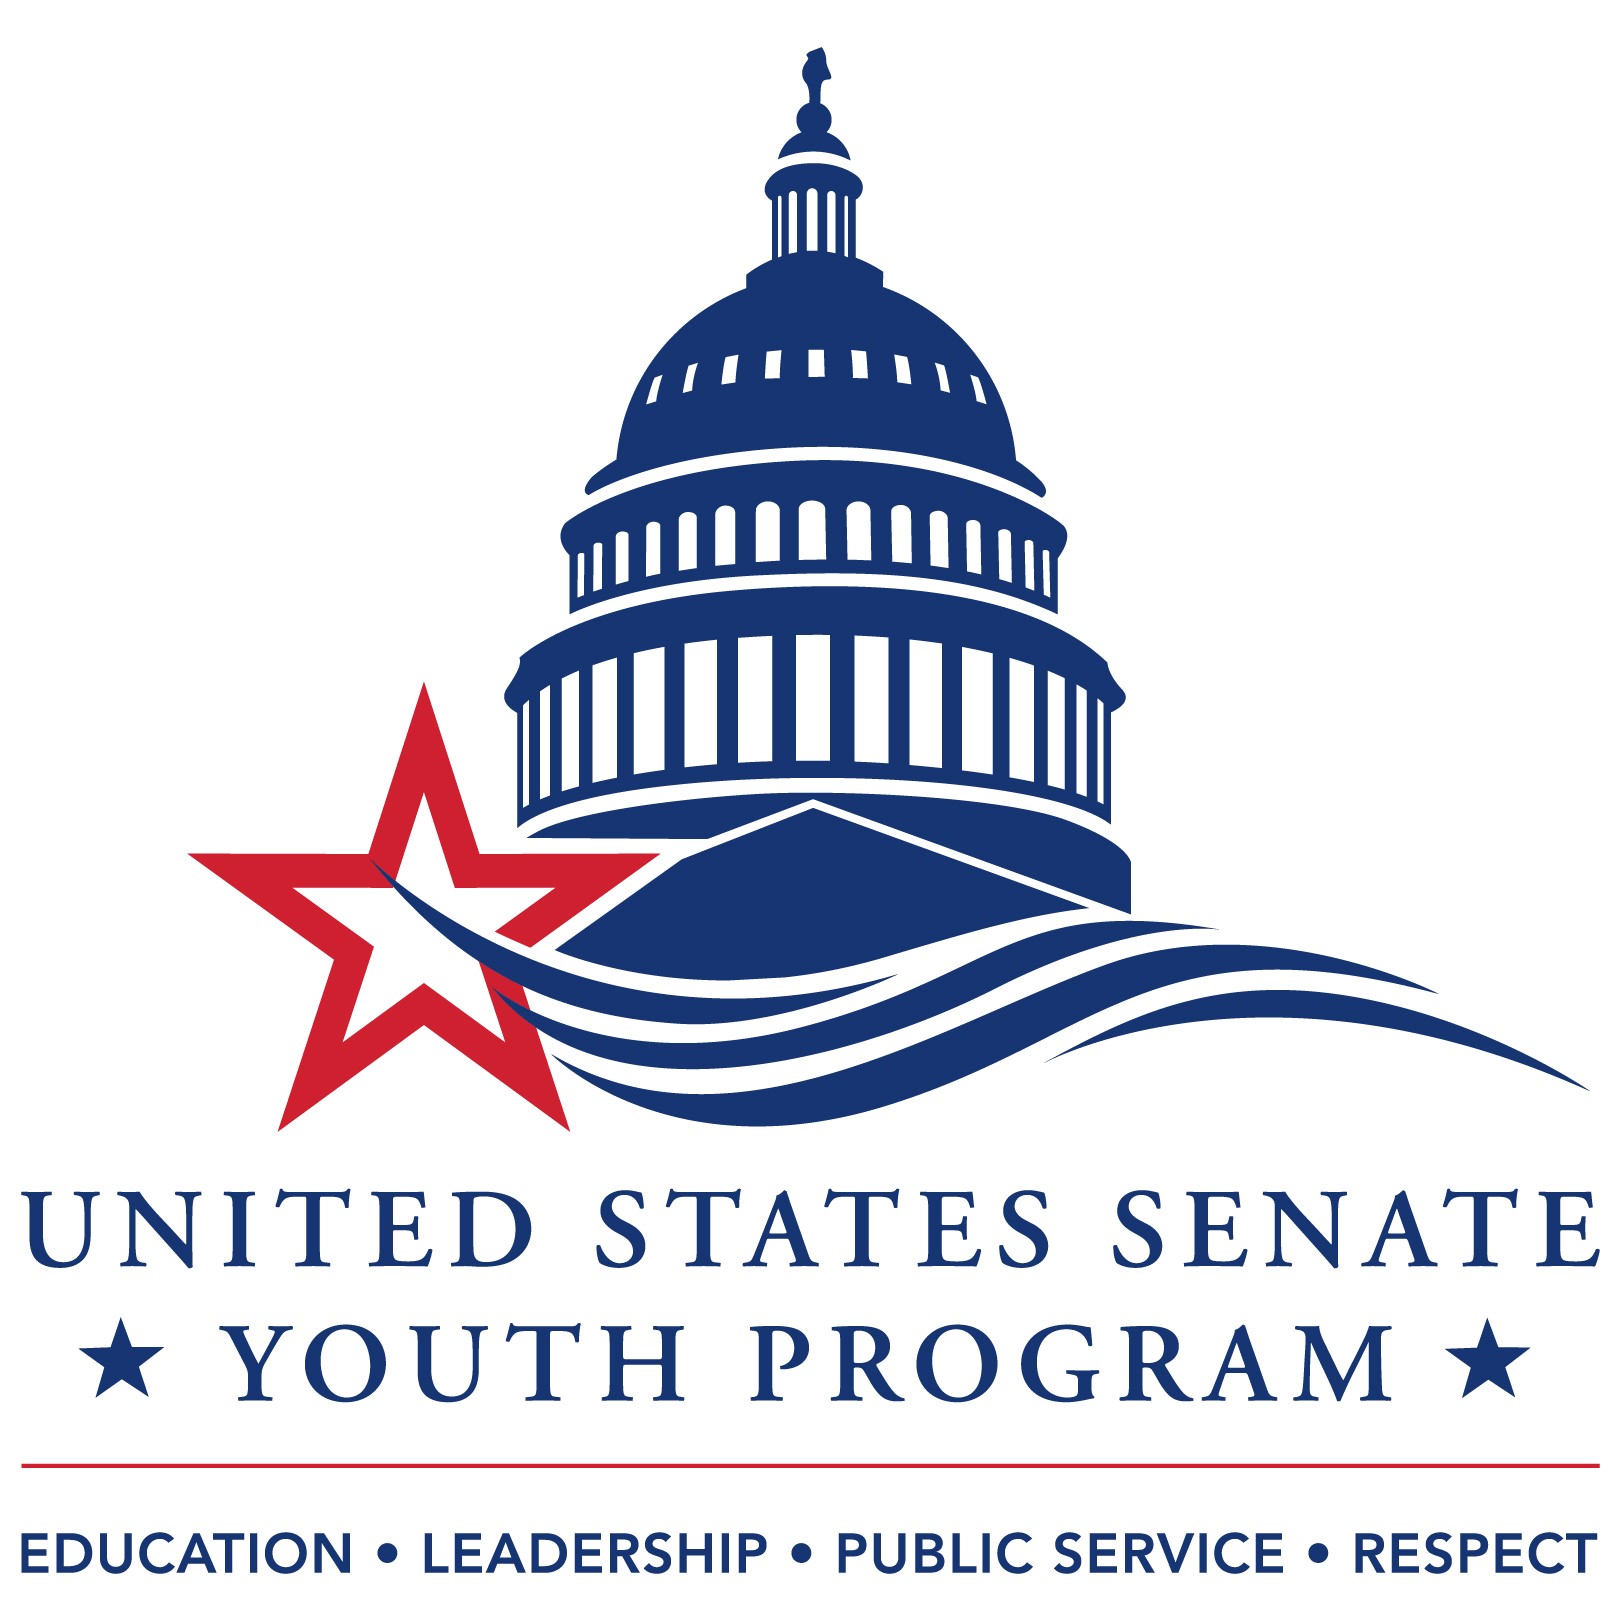 United States Senate Youth Program: Education, leadership, public service, respect